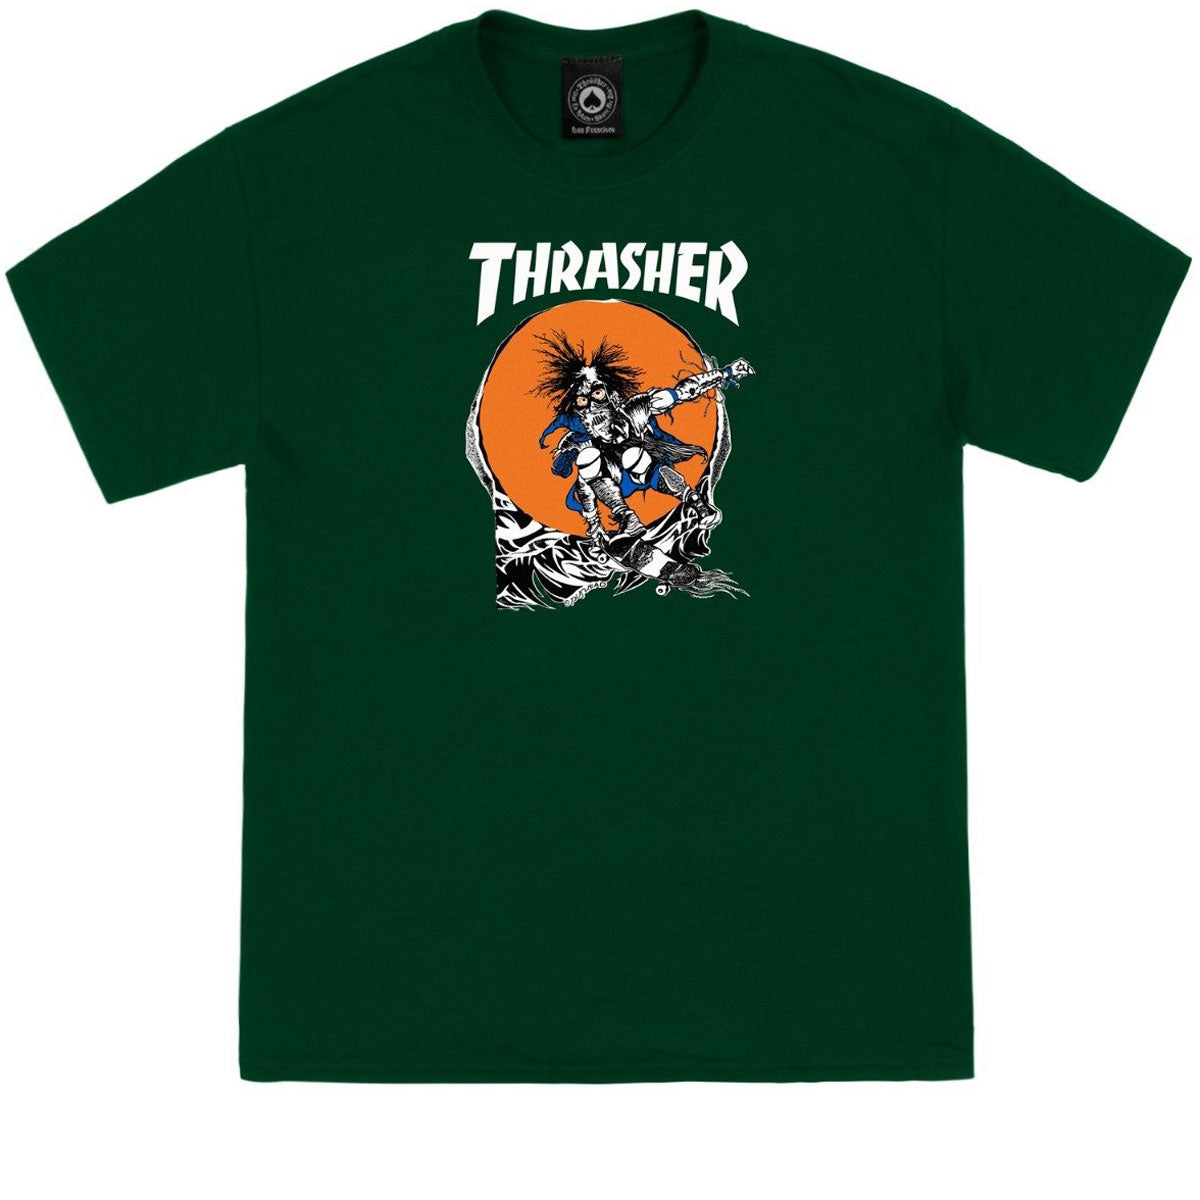 Thrasher Skate Outlaw T-Shirt - Forest Green image 1